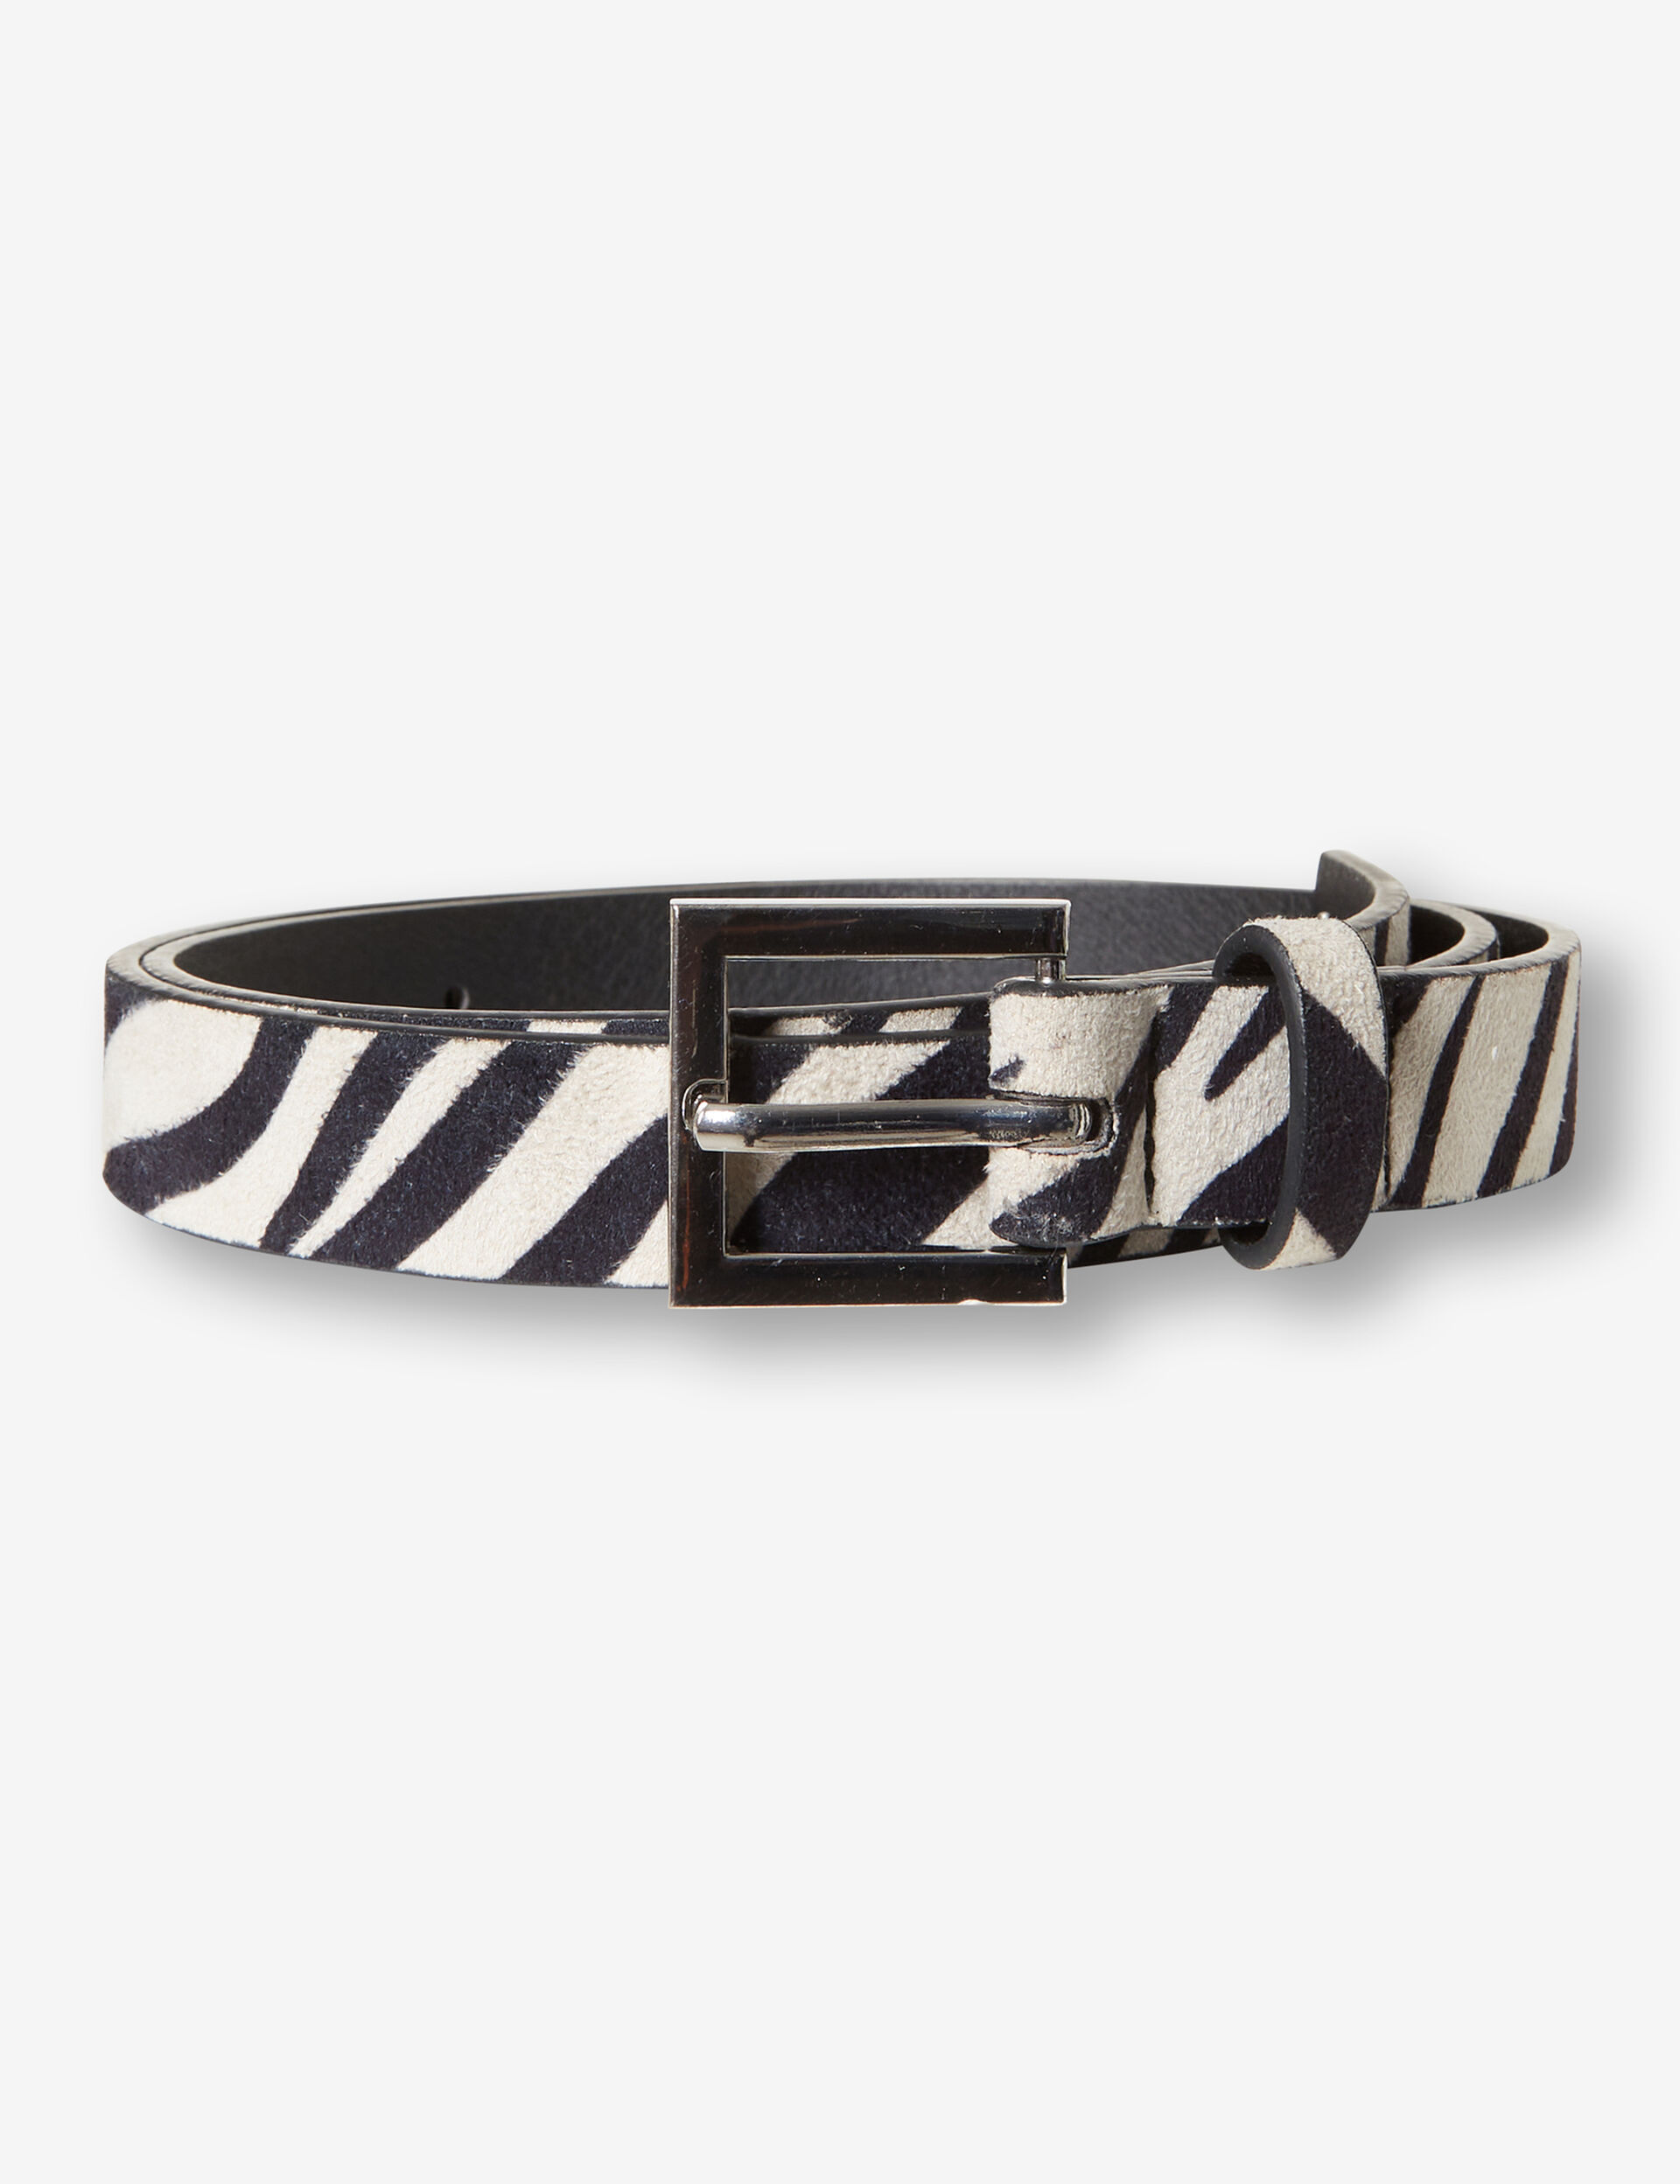 Zebra belt